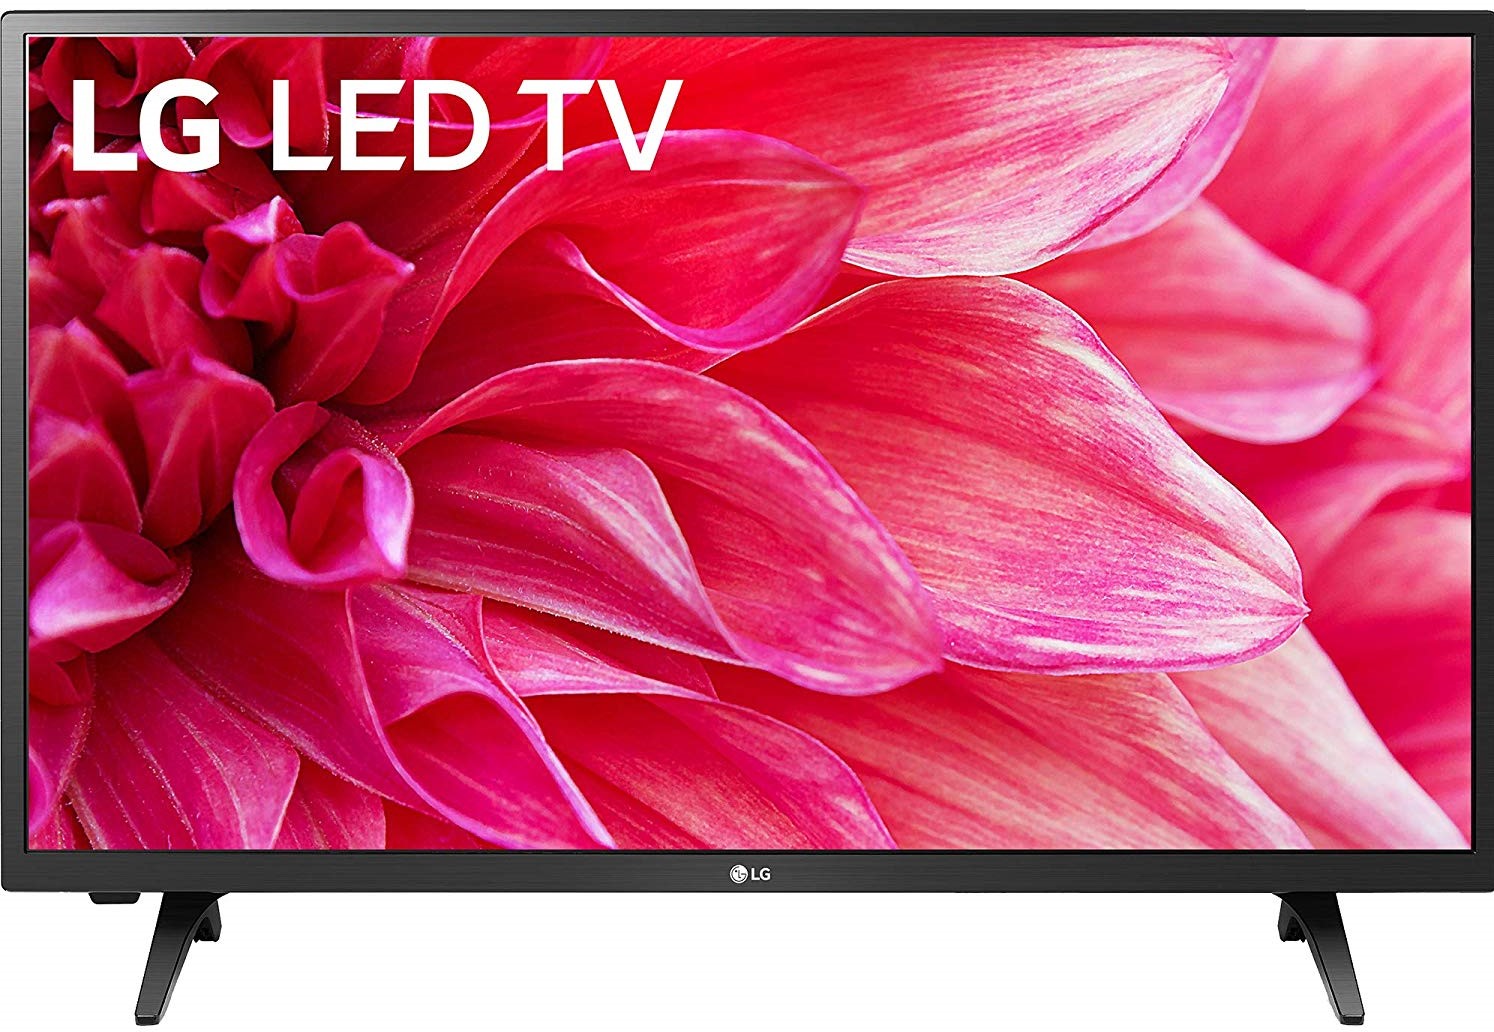 LG LED TV 32"